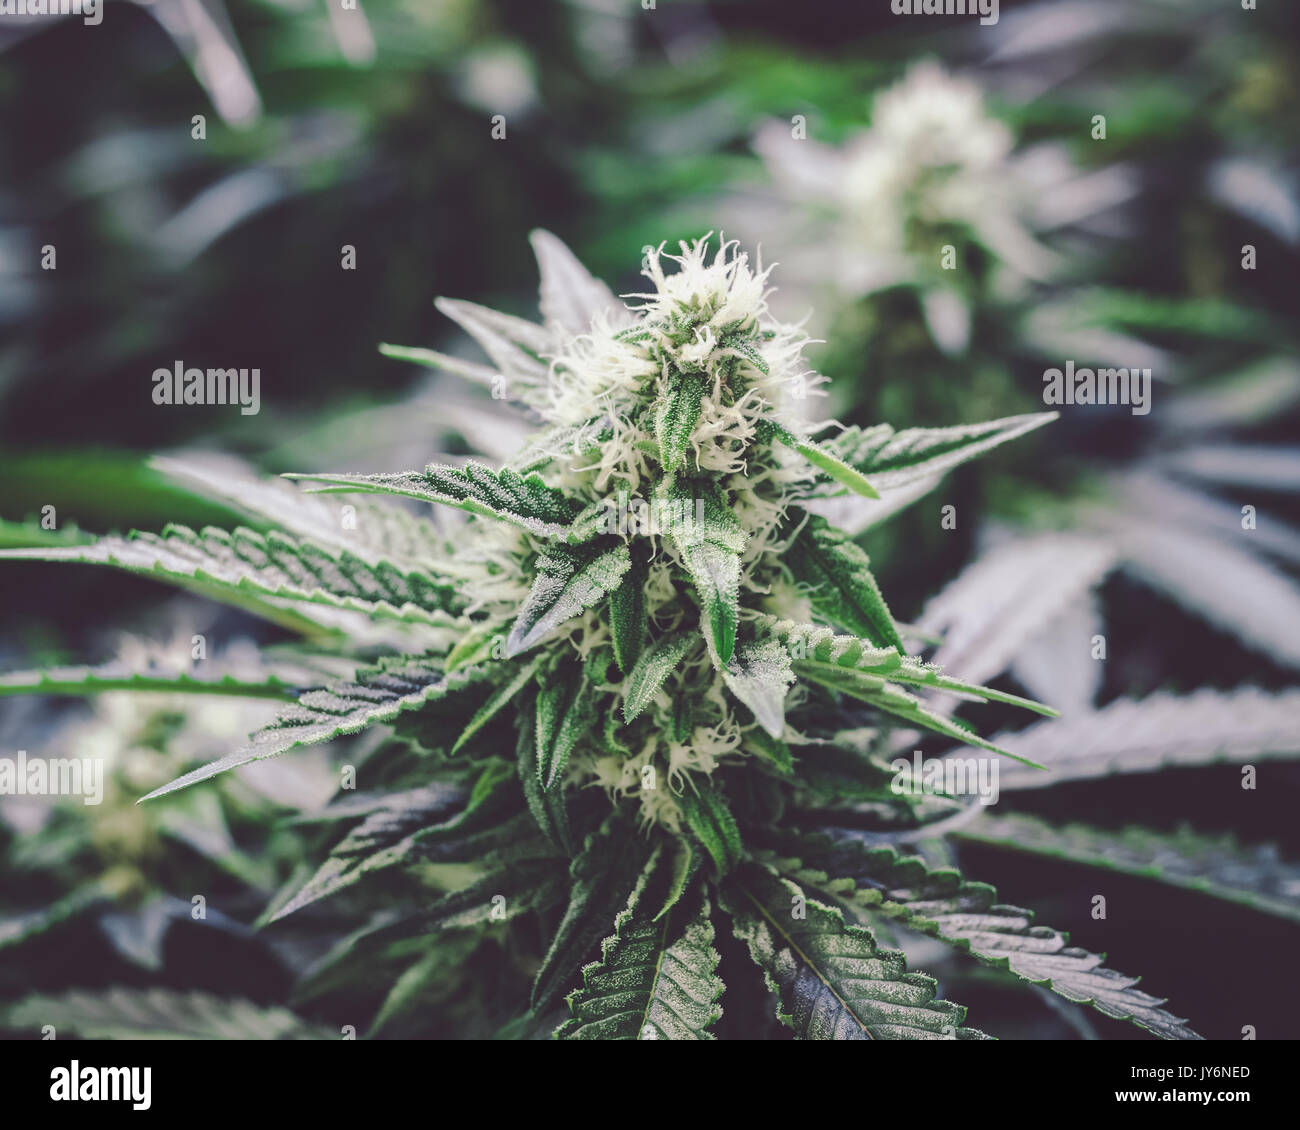 Epic close up of weed bud growing on indoor Marijuana plants Stock Photo